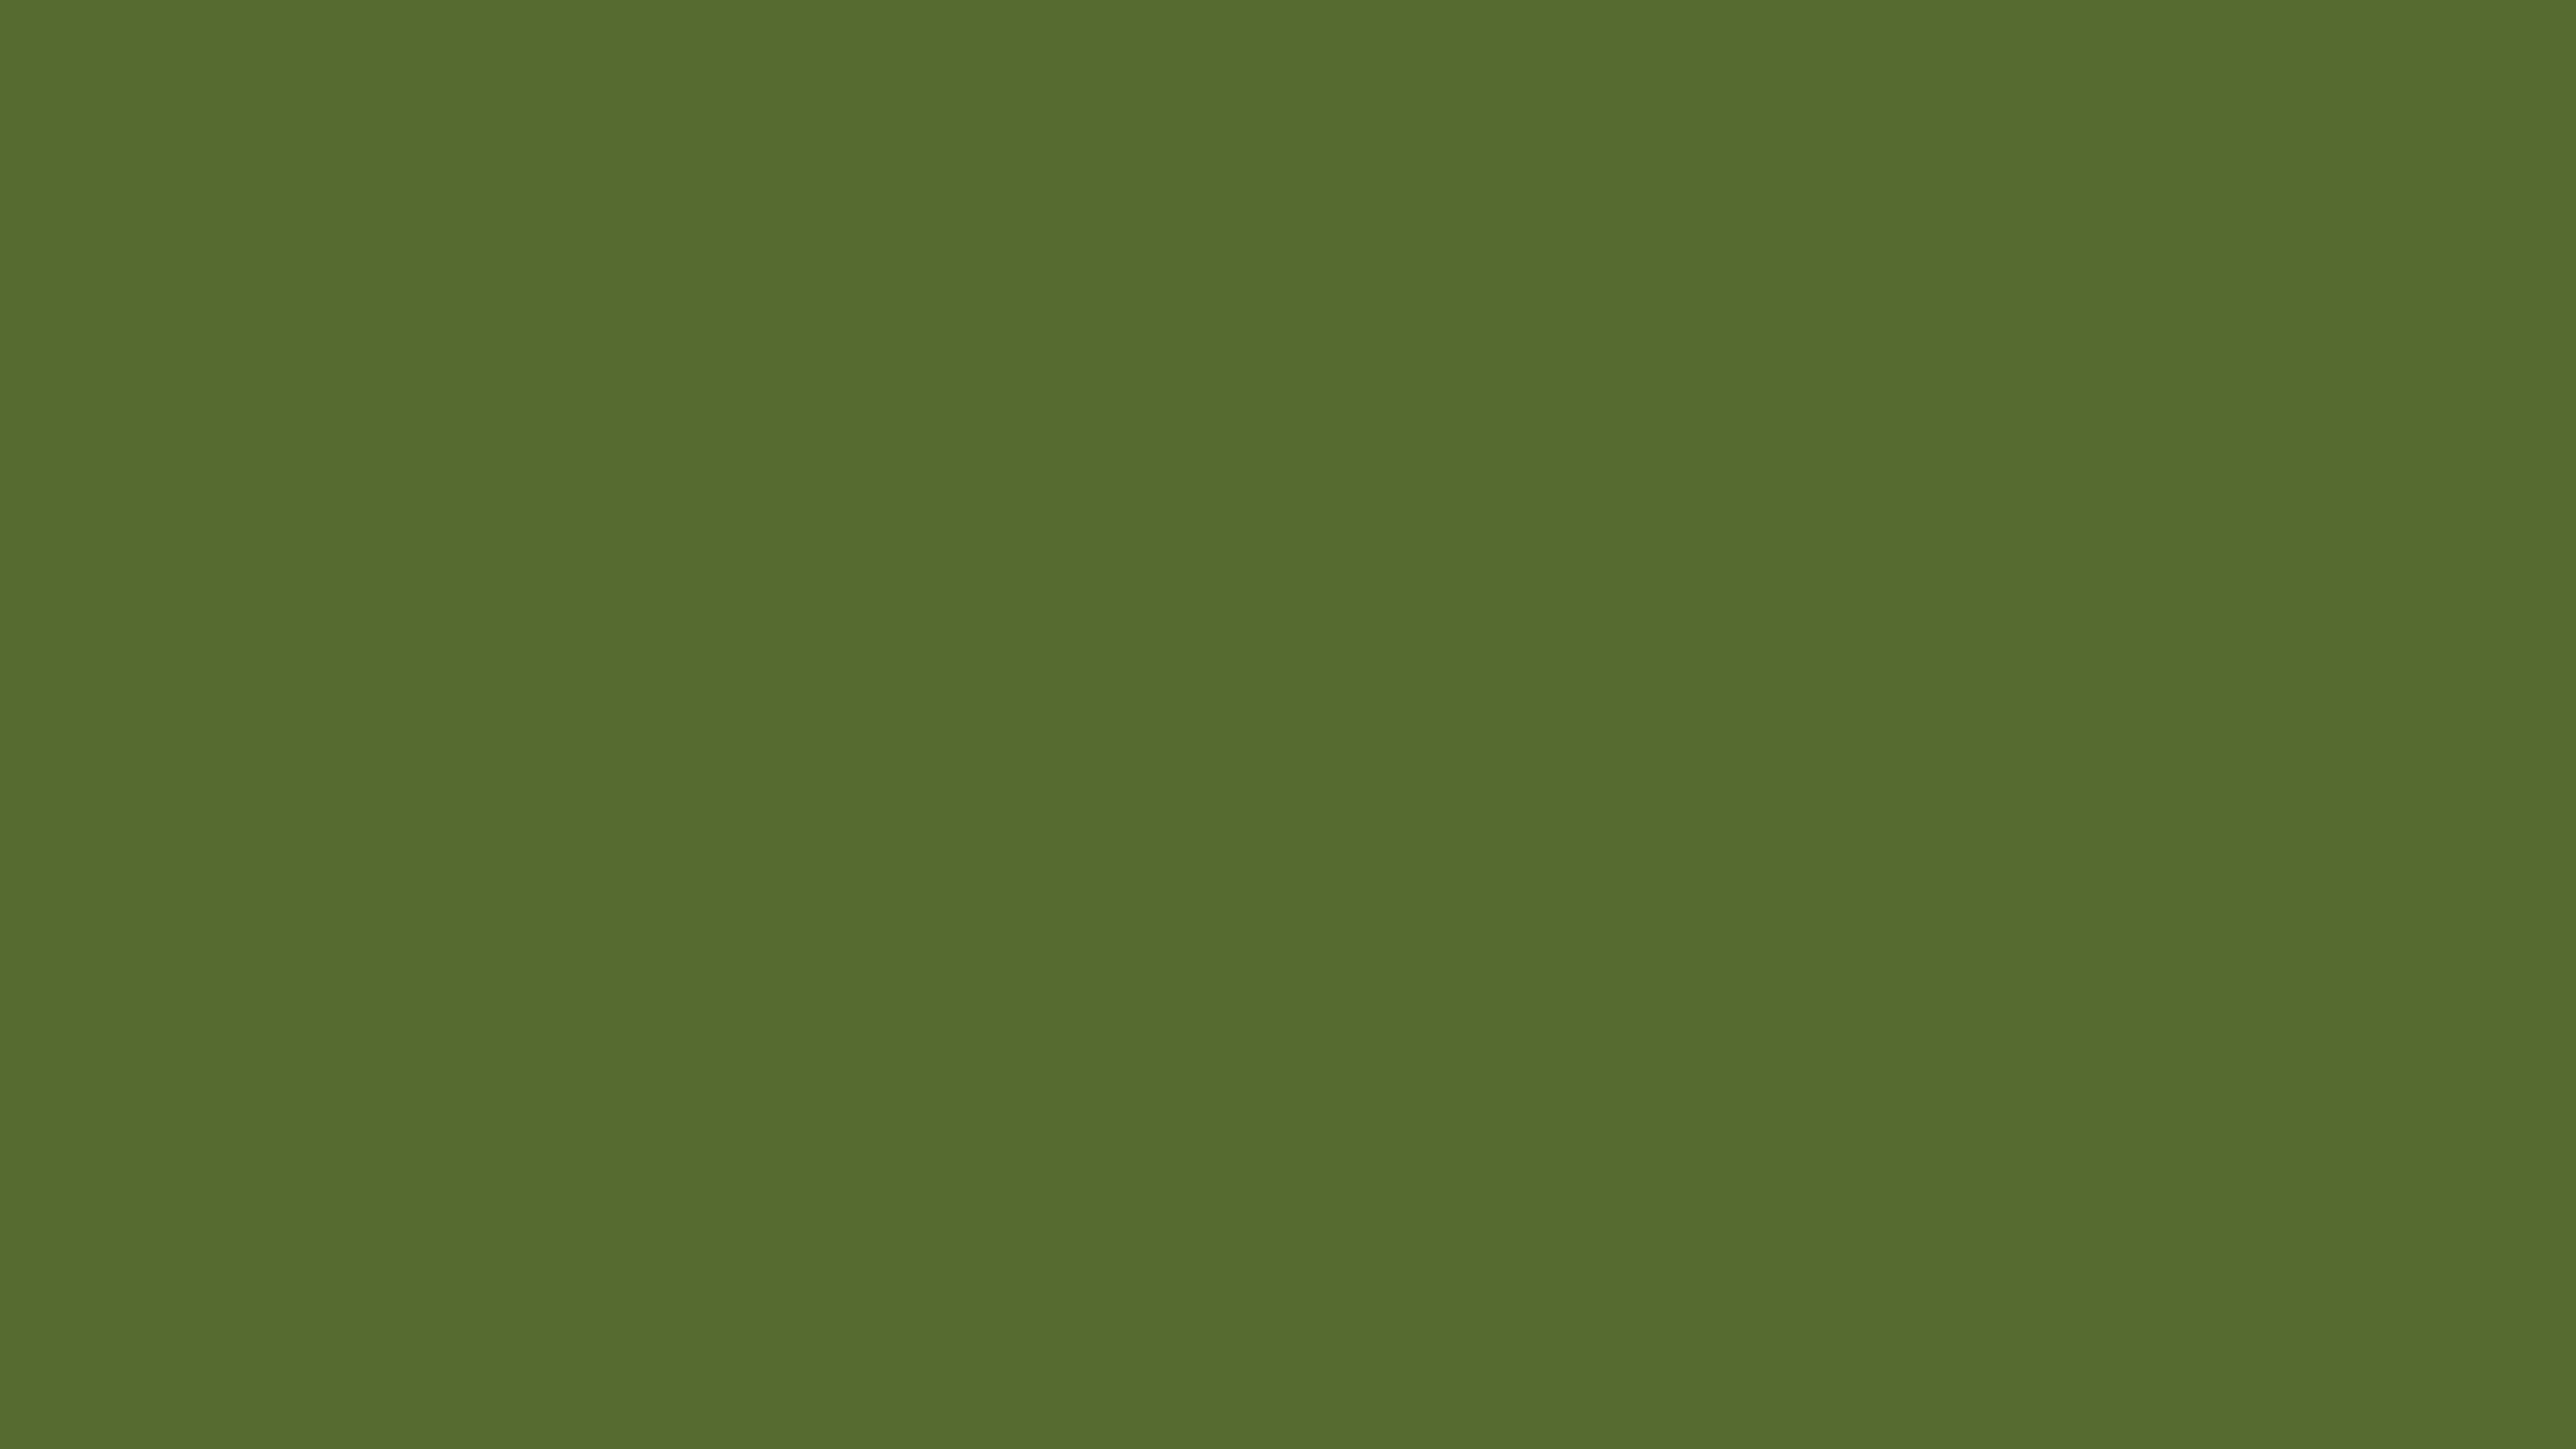 7680x4320 Dark Olive Green Solid Color Background